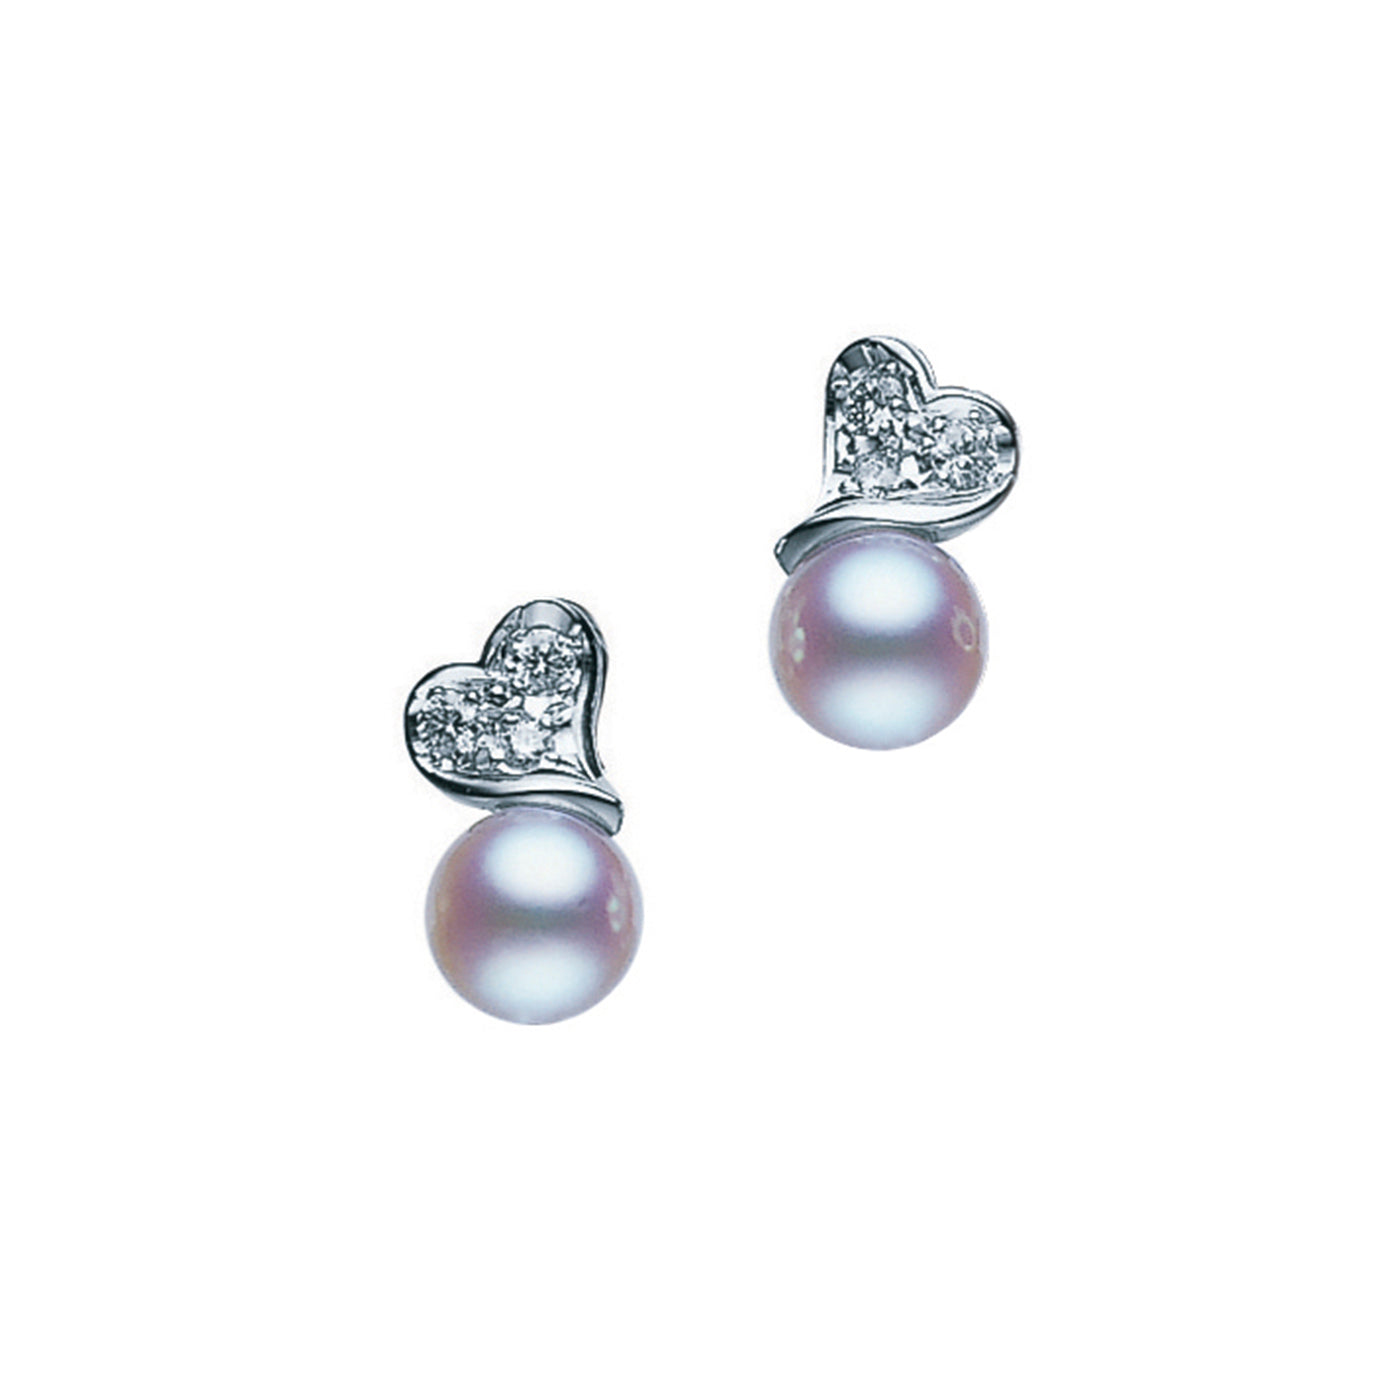 White Gold Diamond and Pearl Heart Earrings